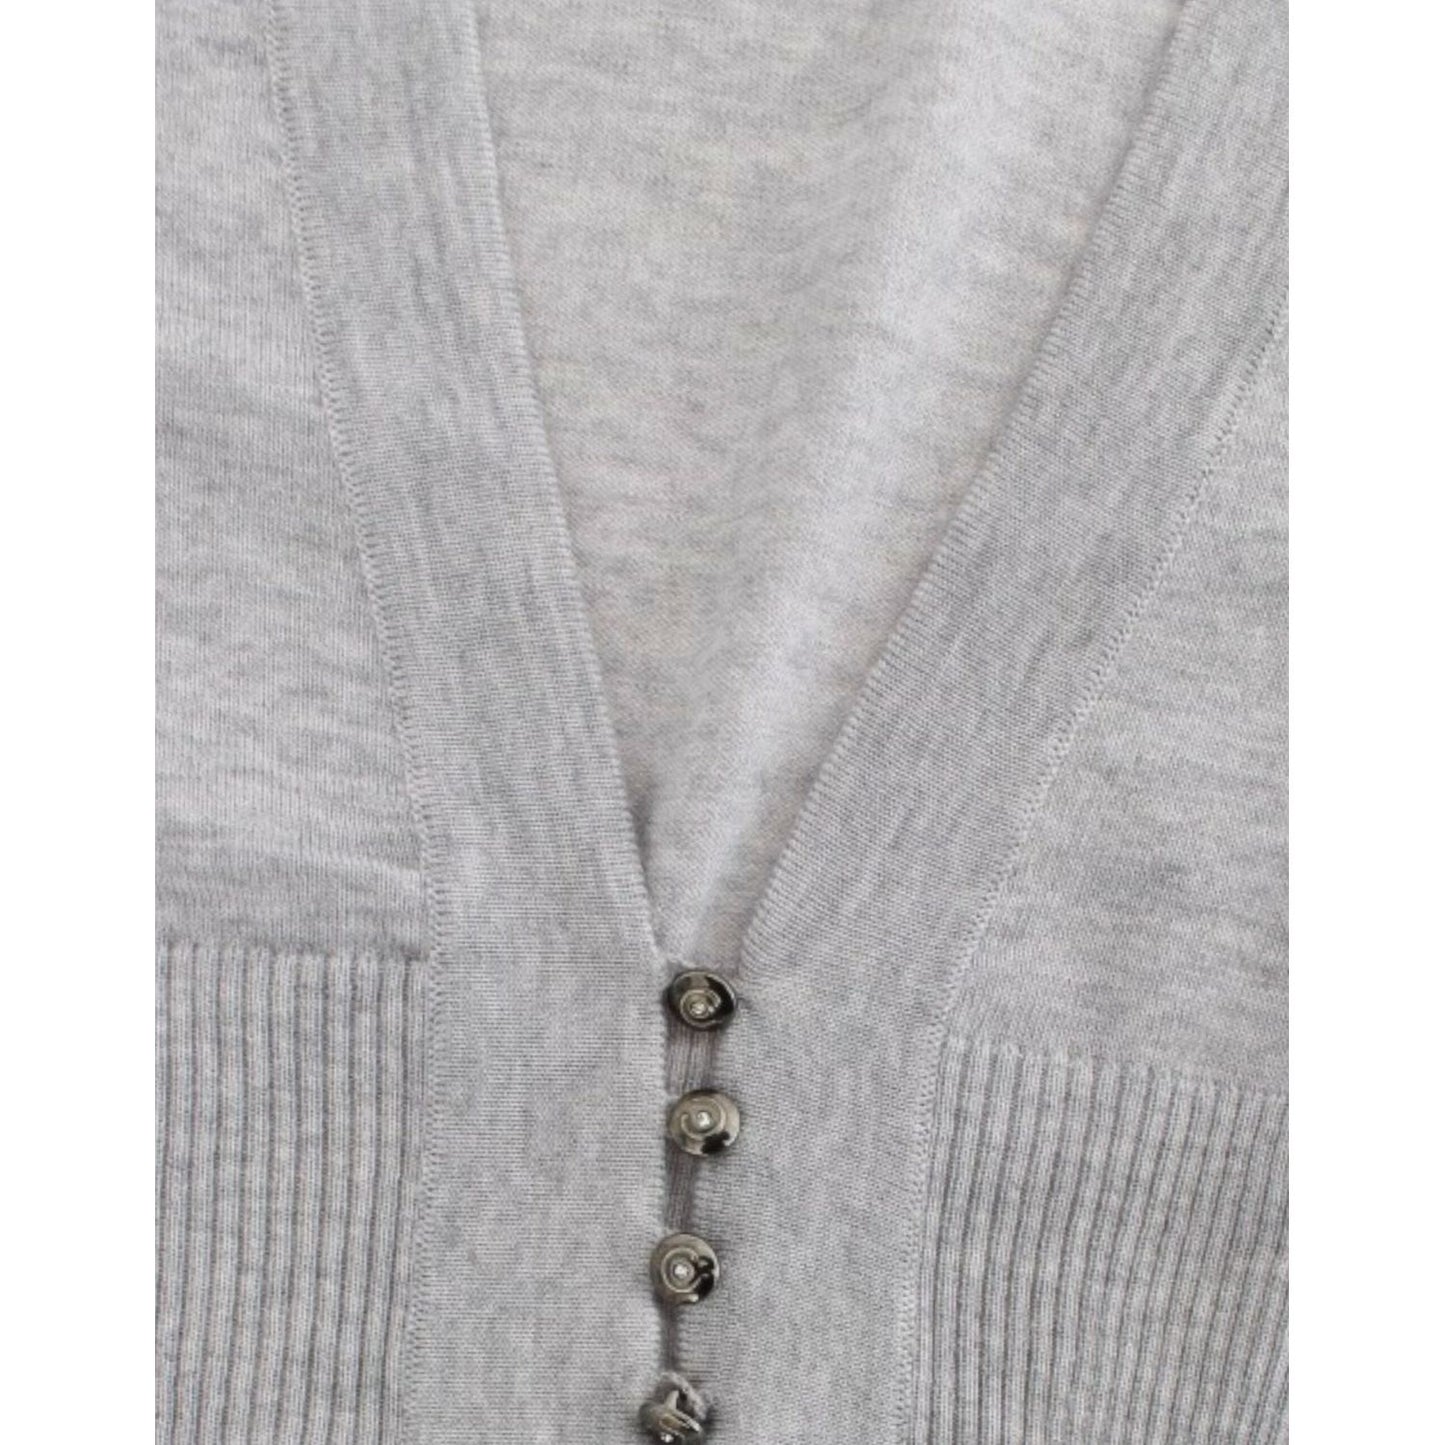 Cavalli Cropped Virgin Wool Cardigan in Chic Gray gray-cropped-wool-cardigan